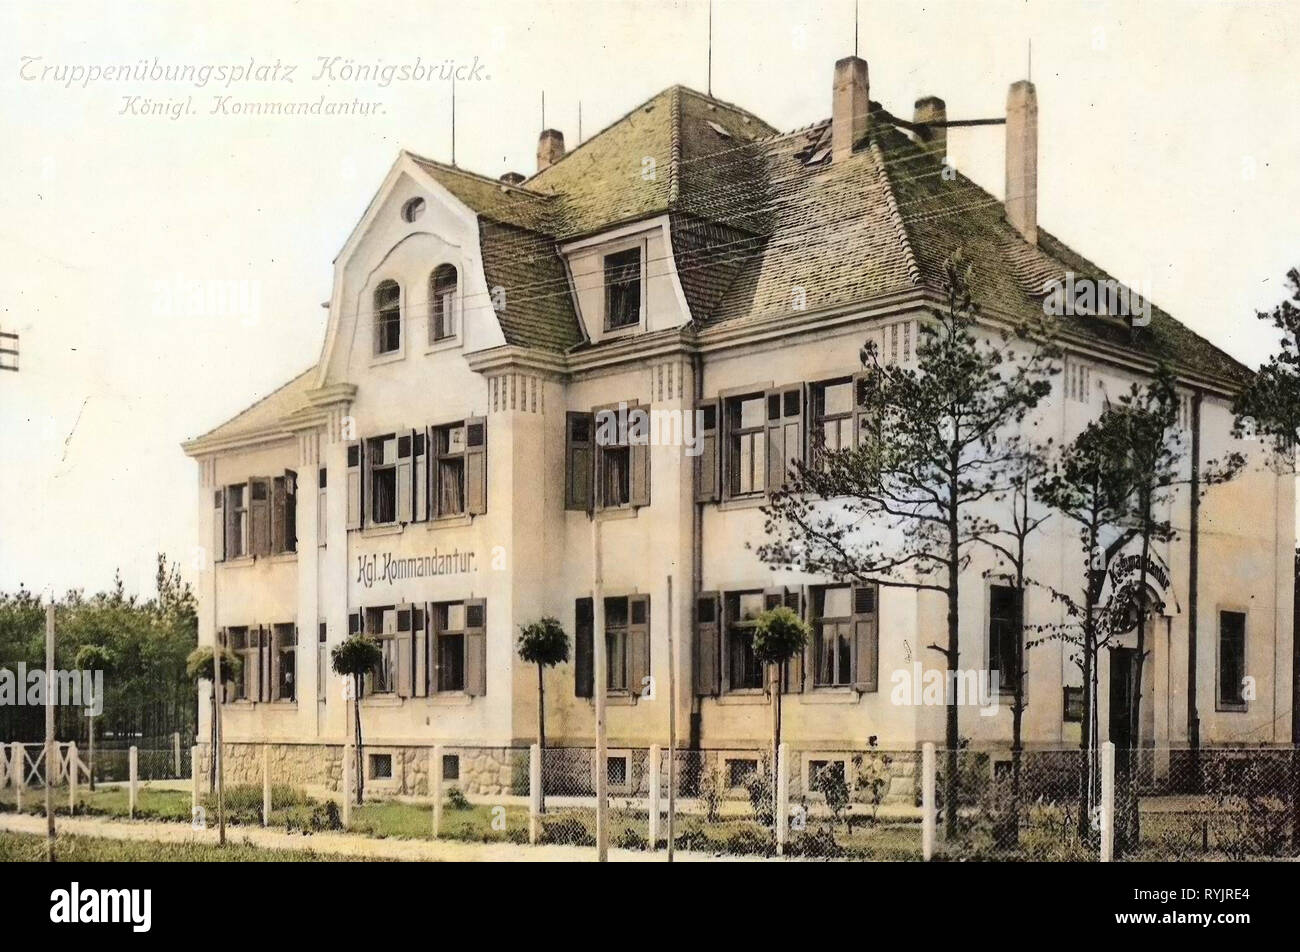 Military training grounds of Germany, Kommandantur (Neues Lager), 1911, Landkreis Bautzen, Königsbrück, Truppenübungsplatz, Kommandantur Stock Photo